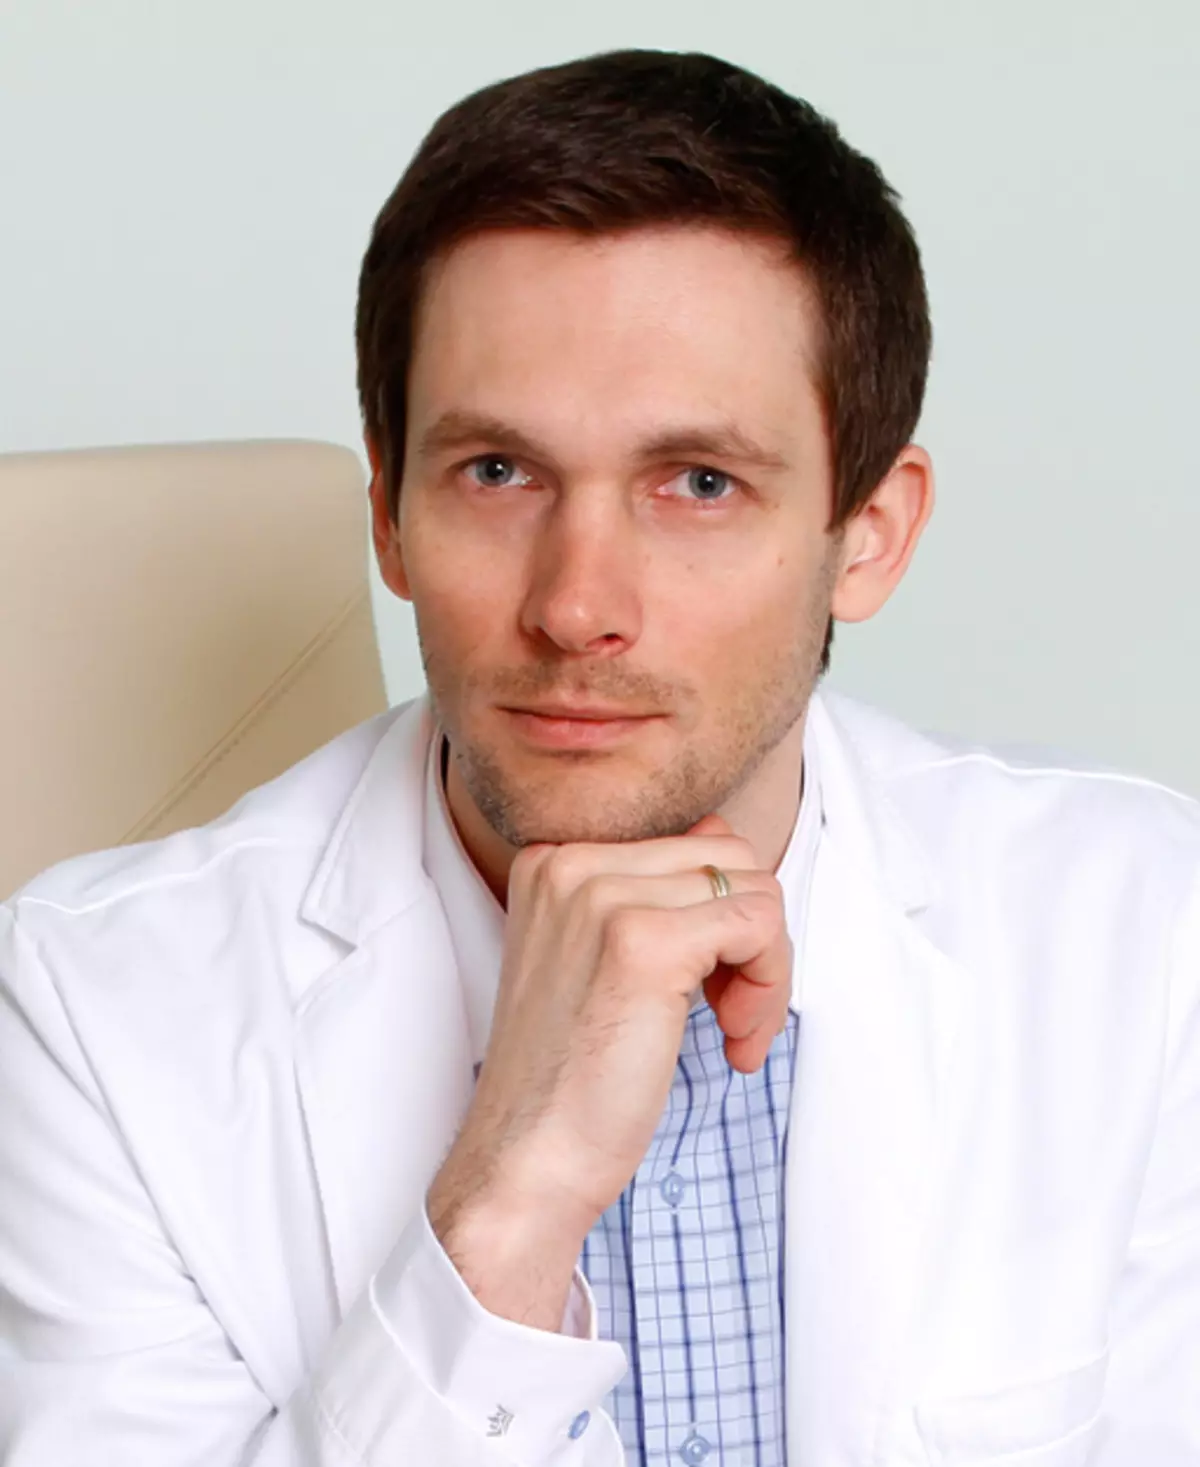 Medical Sciences'i kandidaat, plastist kirurg Vladimir Zlenko